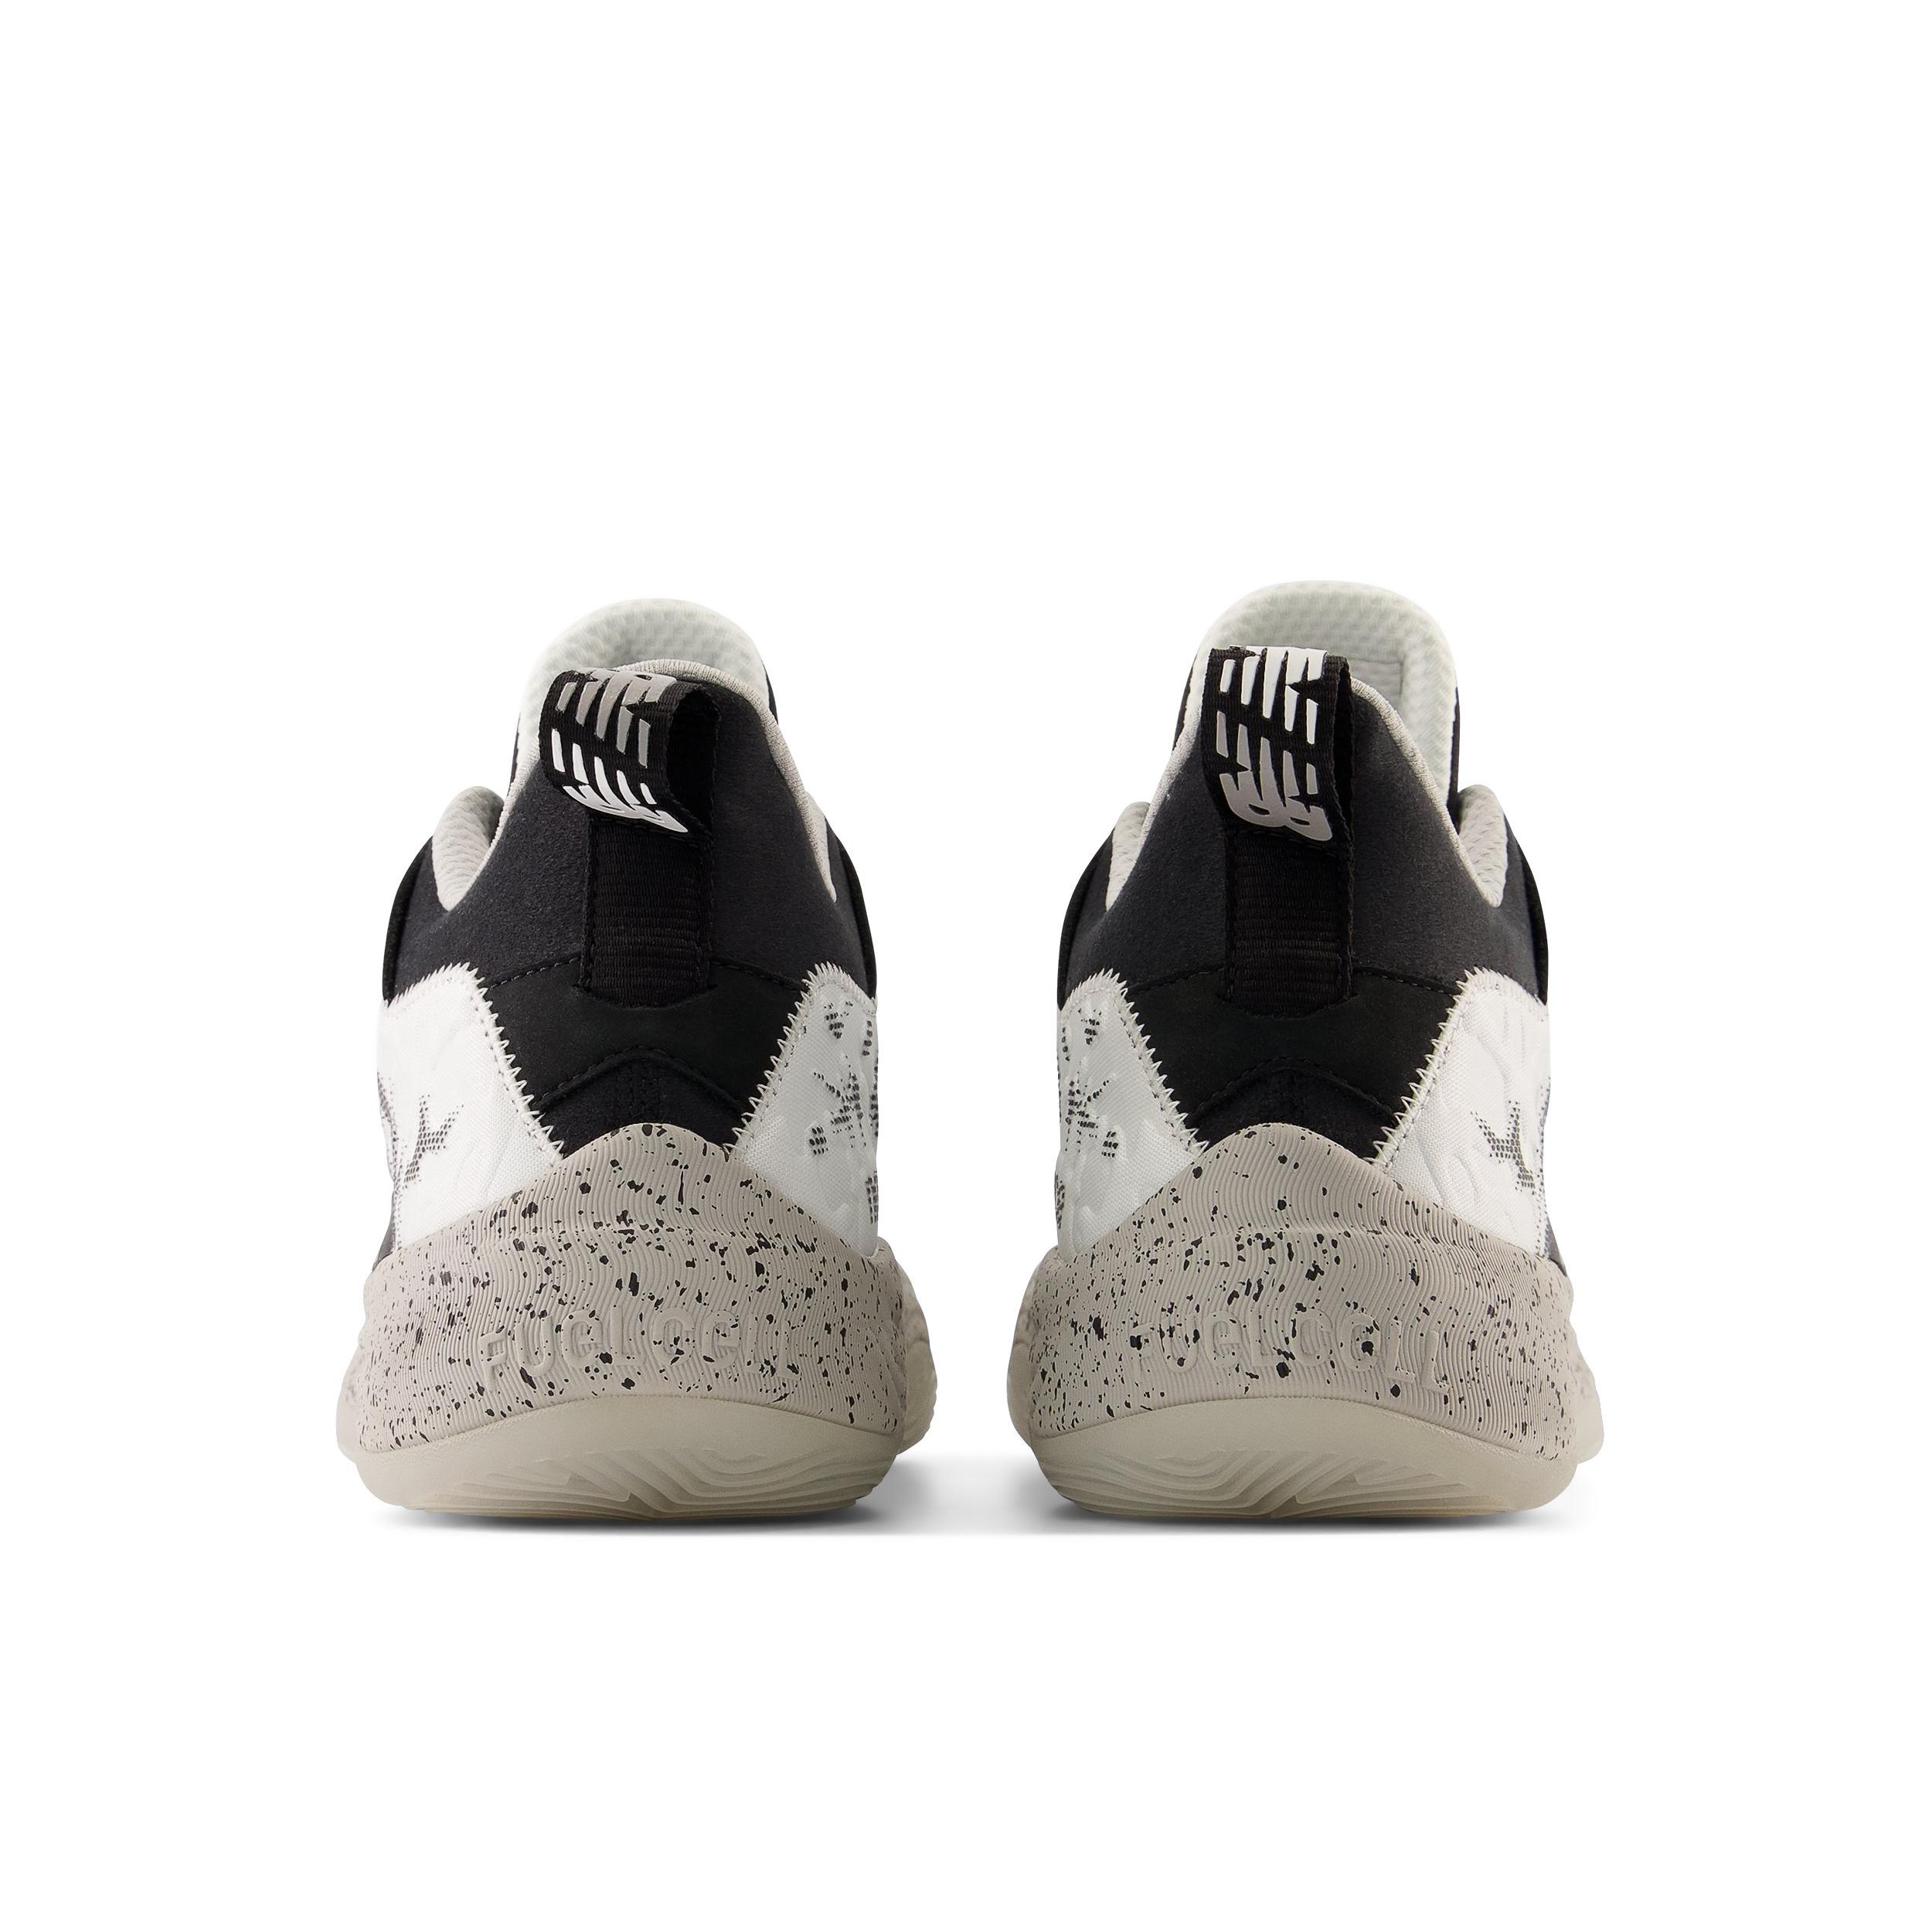 Sneakers Release – Nike Air Force 1 LV8 2 “Black/White”  Grade School, Preschool & Toddler Kids’ Shoe Launching 2/7